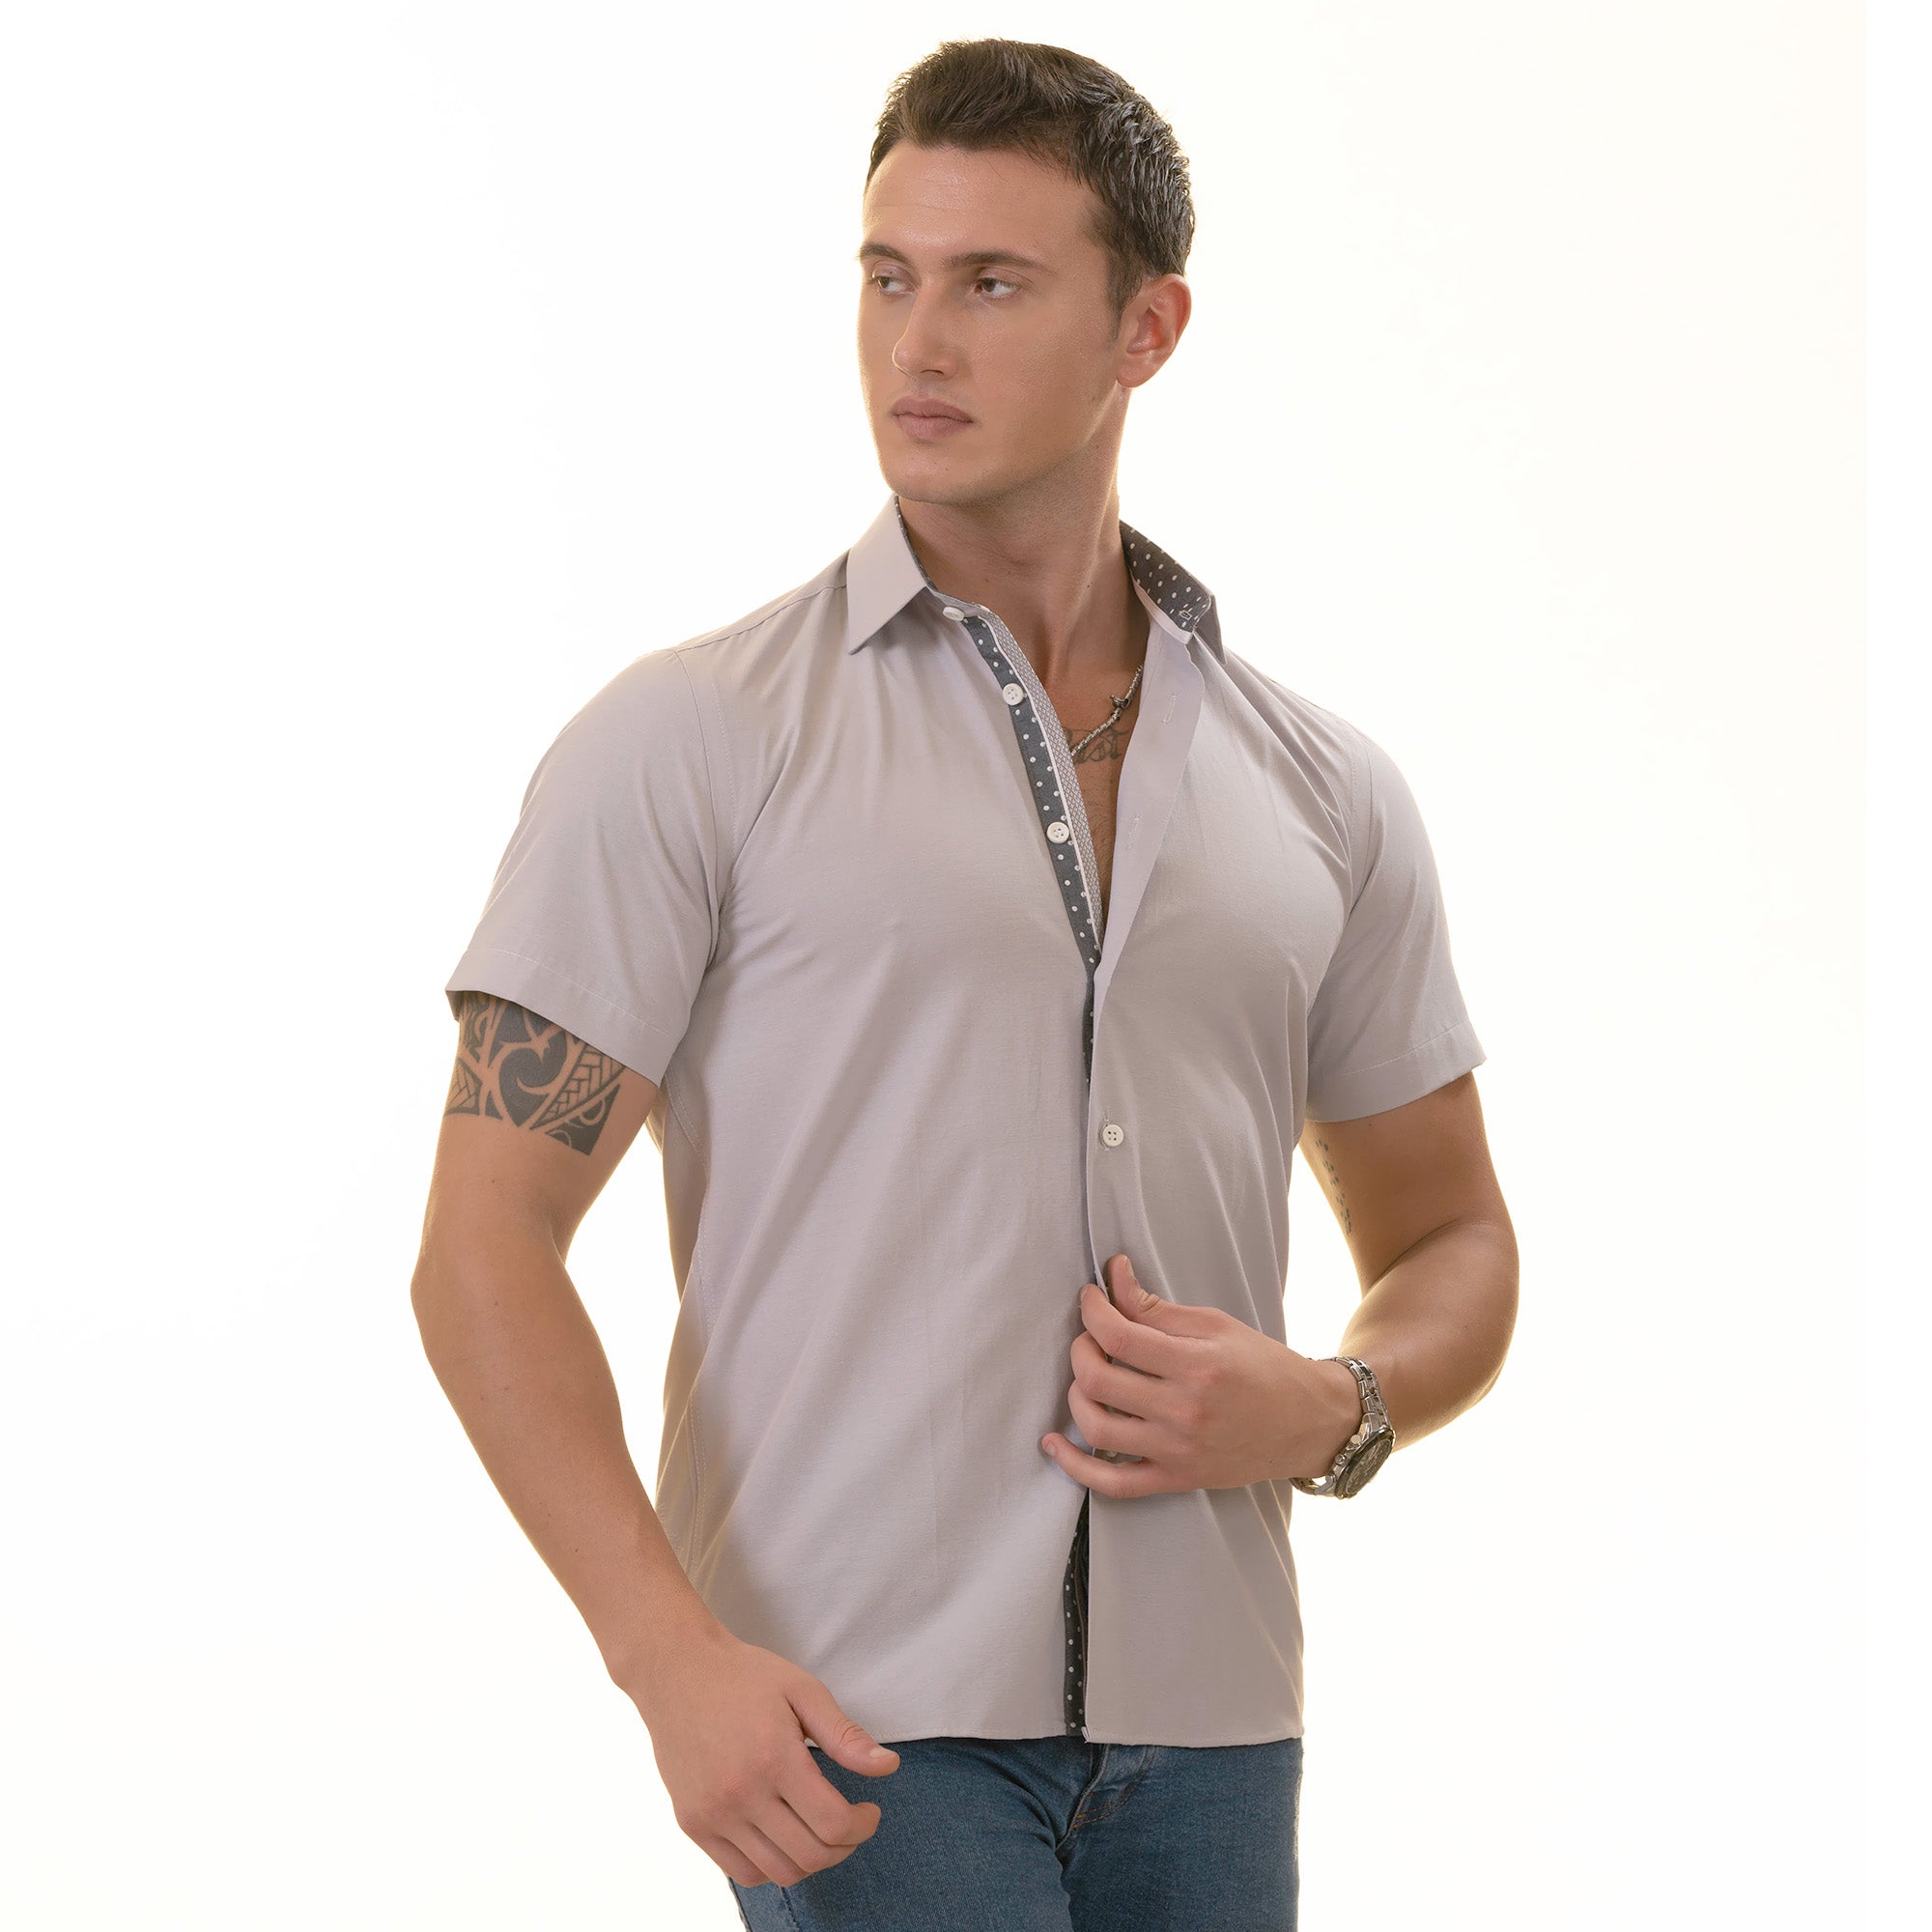 Light Purple Button Up Shirt | Short Sleeves Shirt - Tailored Slim Fit Cotton Dress Shirts